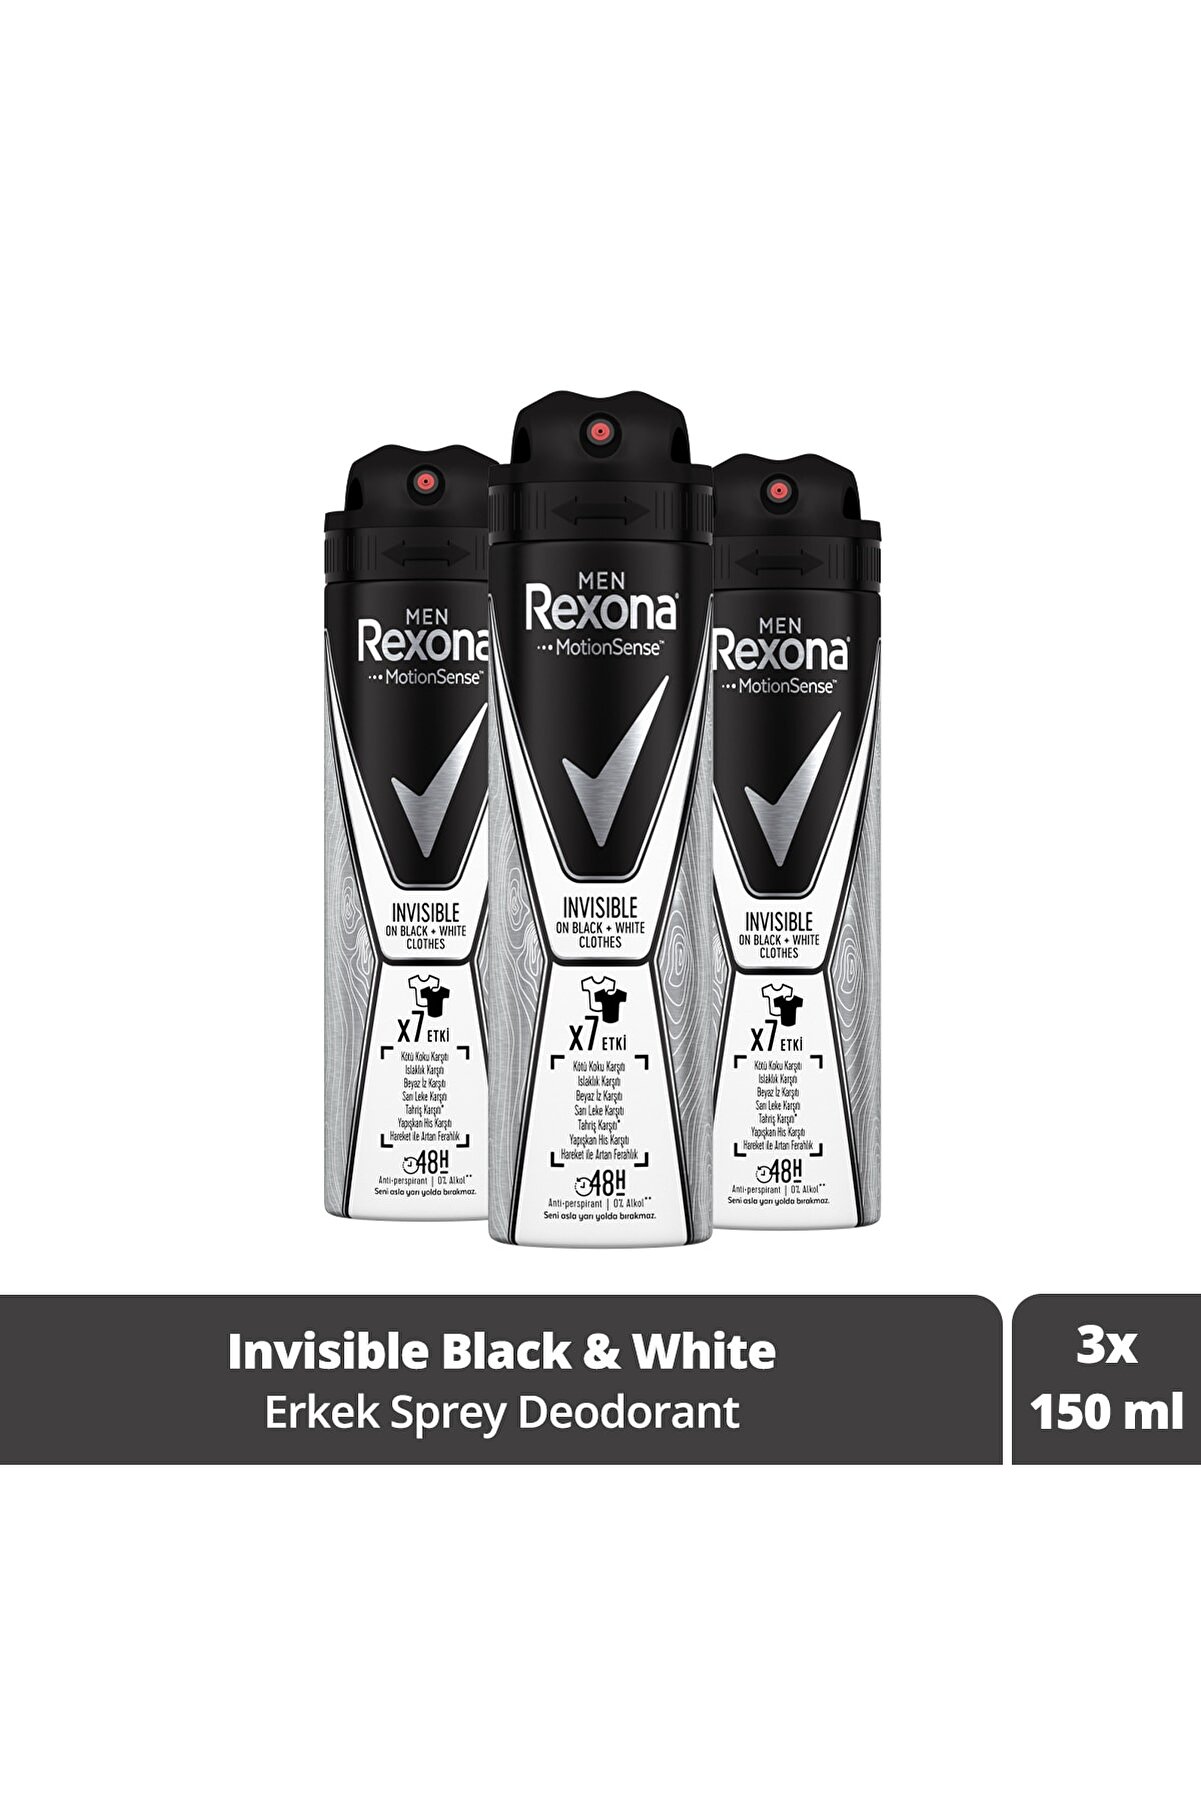 Rexona Men Erkek Sprey Deodorant Invisible On Black White Clothes 150 ml X3 Adet